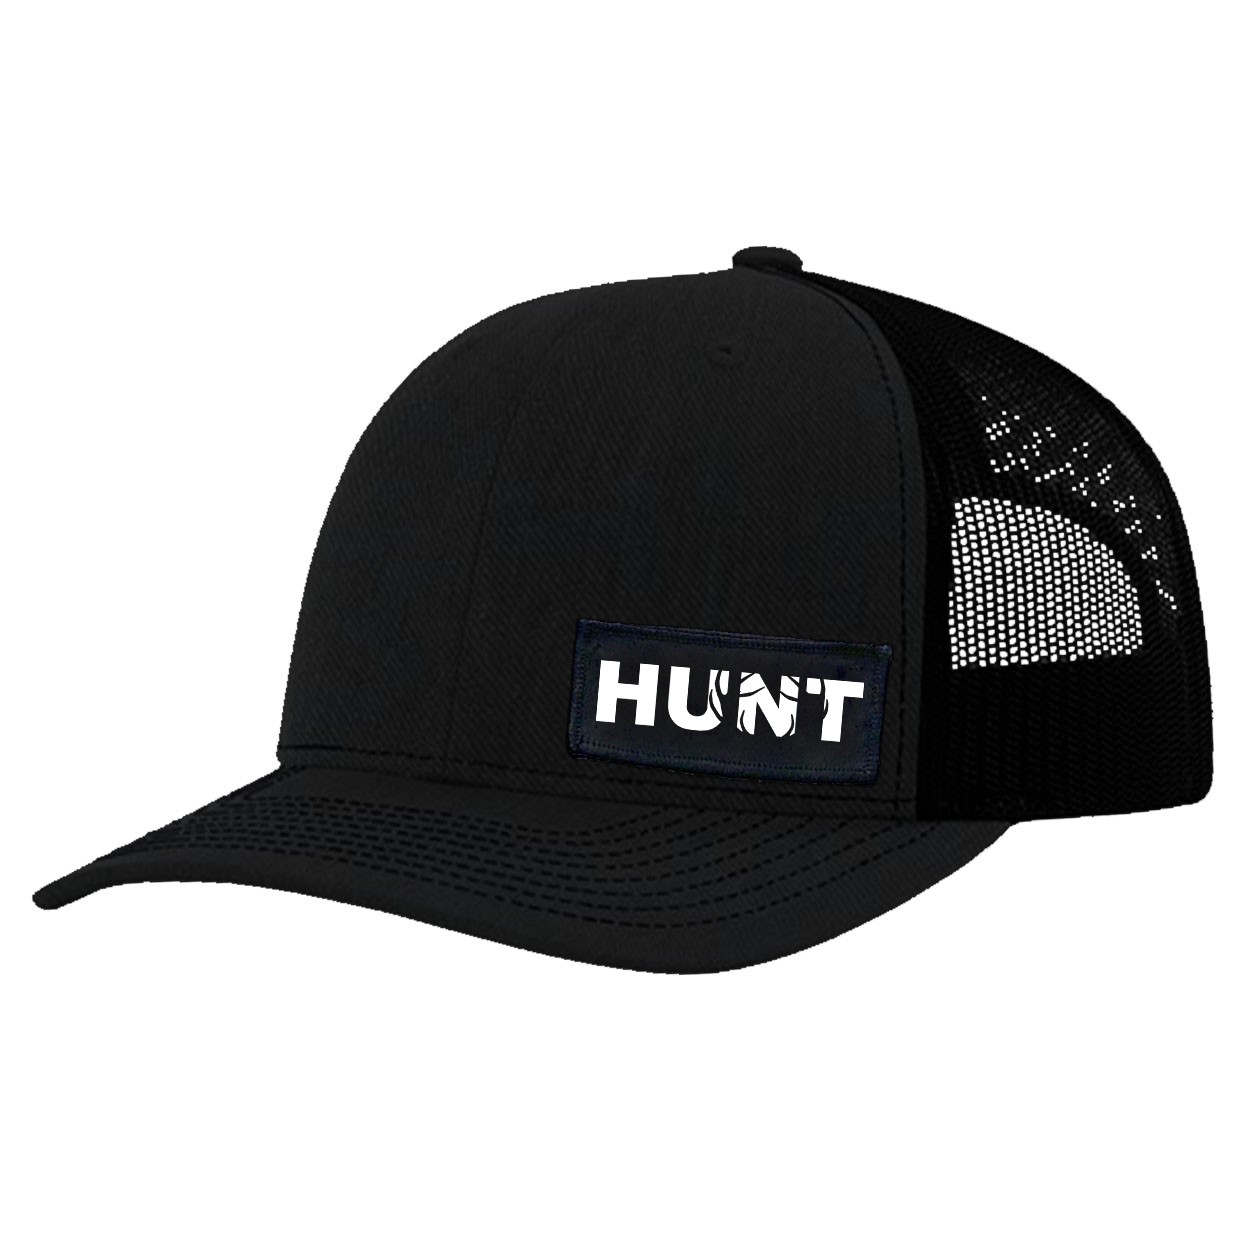 Hunt Rack Logo Night Out Youth Patch Mesh Snapback Hat Black (White Logo)